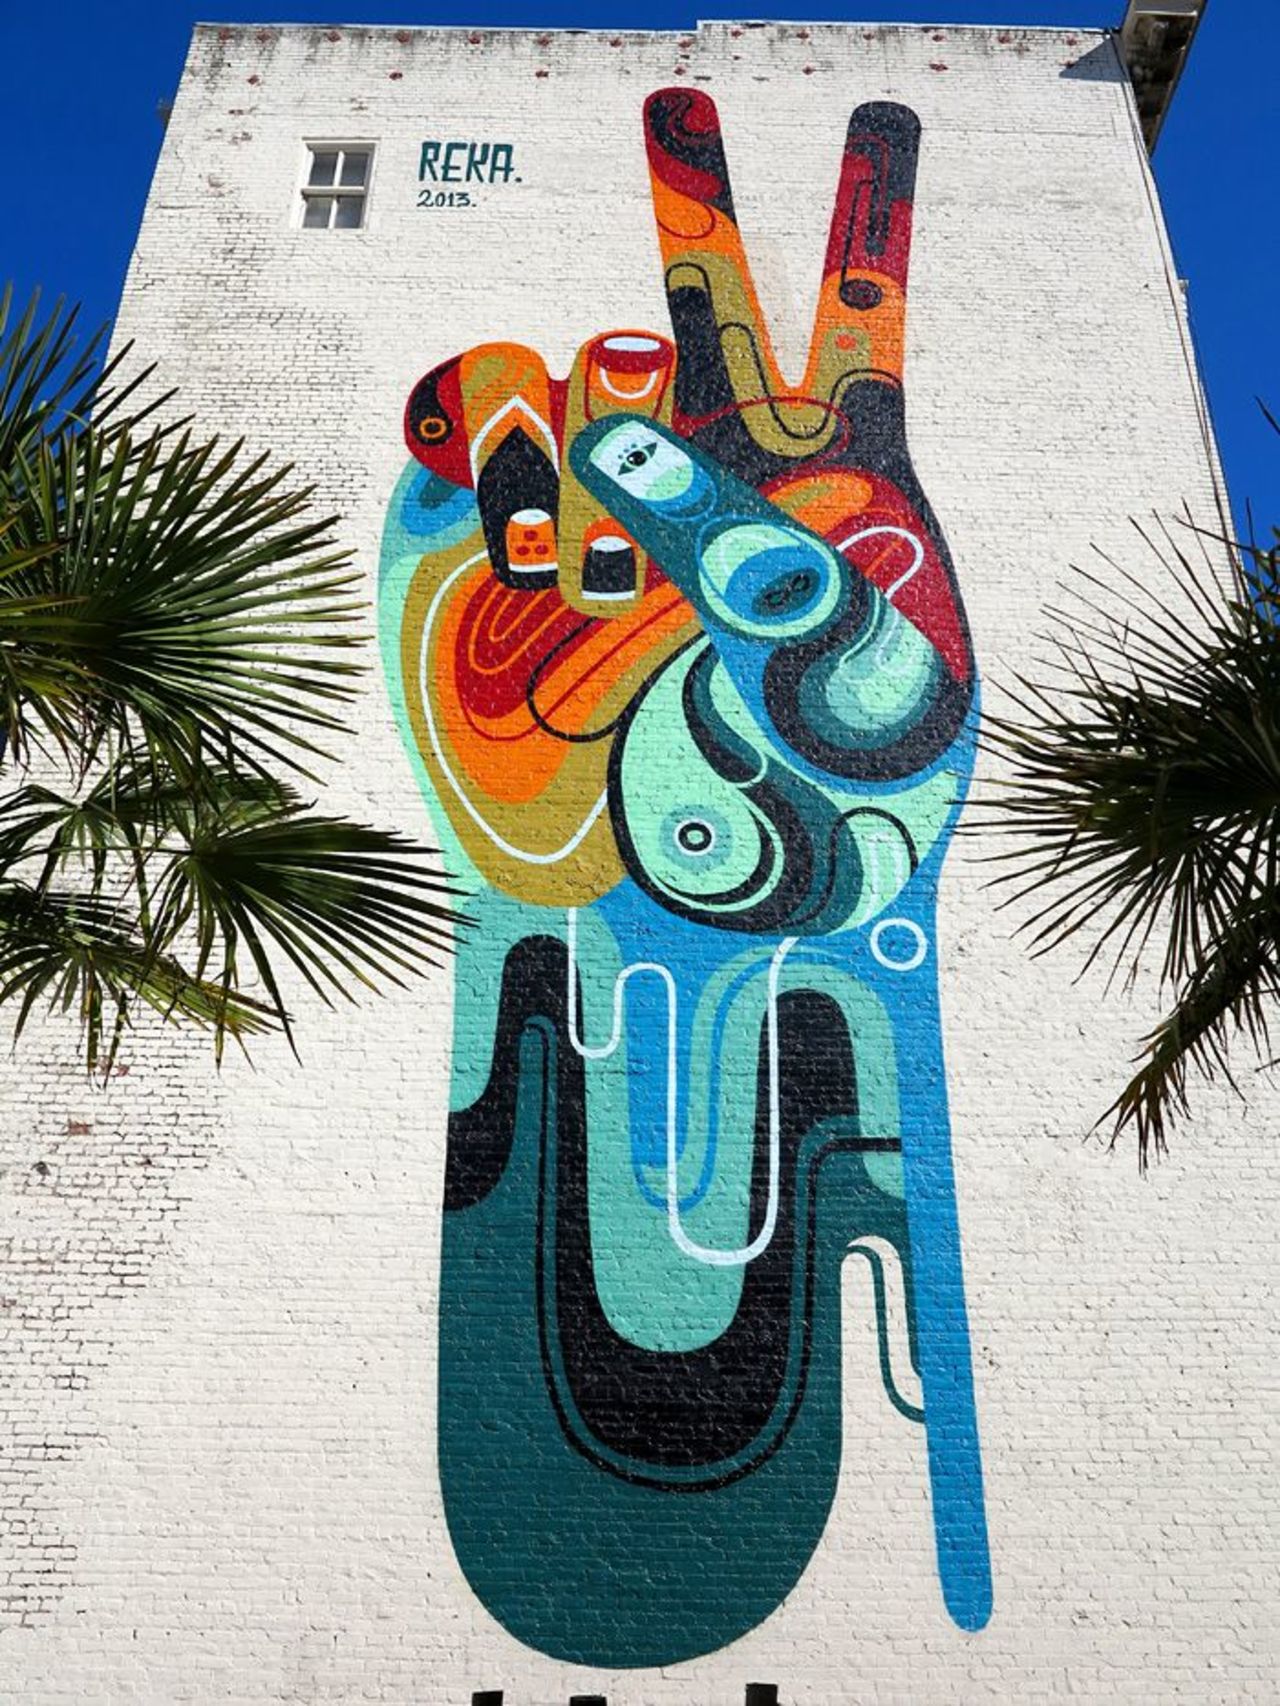 RT "@EseGraffiti: Artistas: Everfresh Studio
Melbourne, Australia
#art #streetart #mural #graffiti #arteurbano http://t.co/MPMvXzOawP"